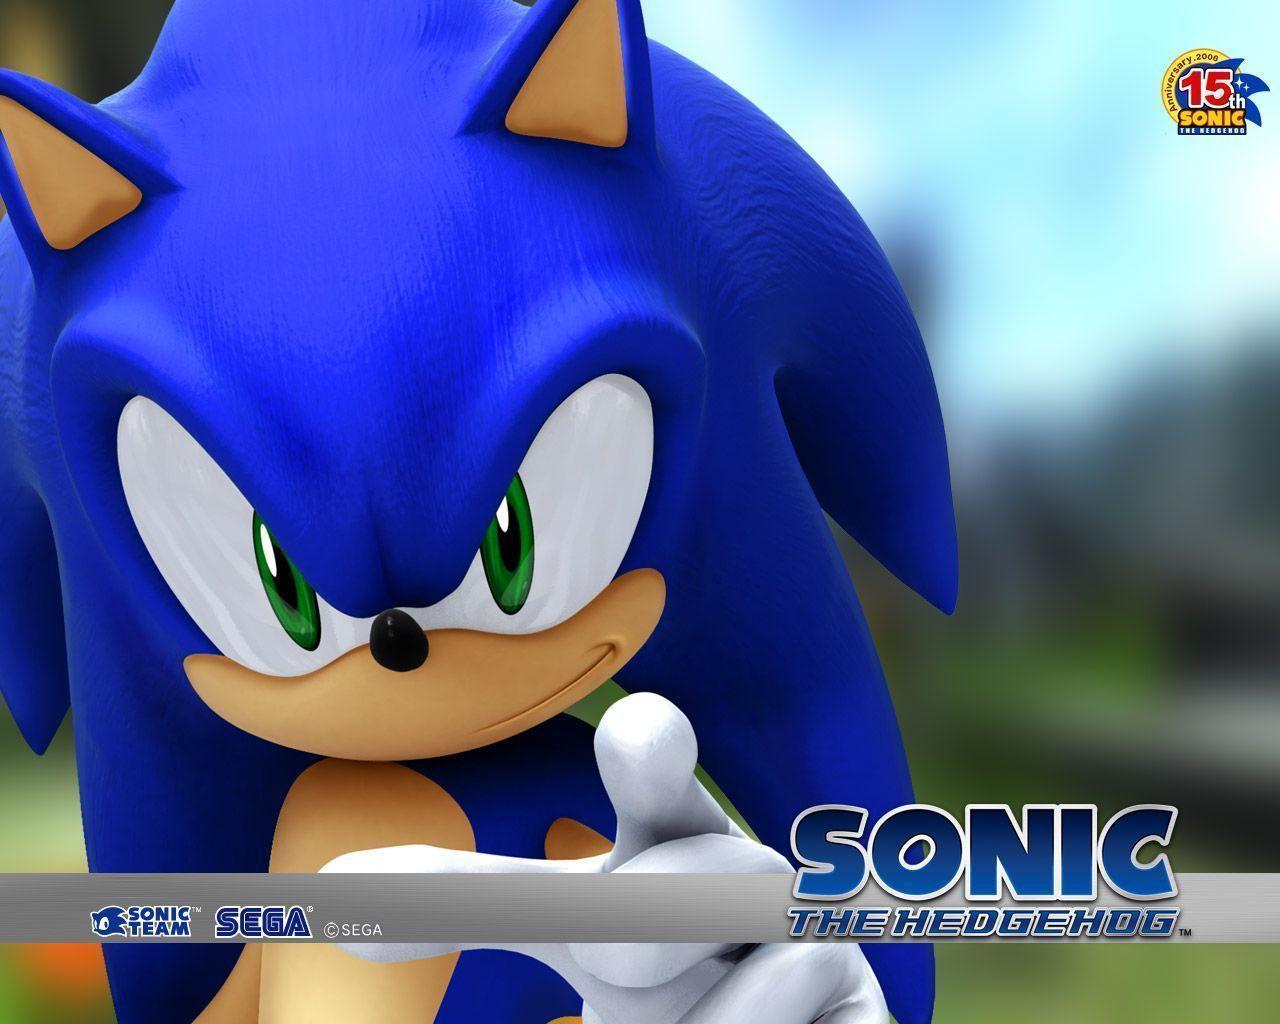 Sonic the Hedgehog Wallpaper 78. HD Background Wallpaper